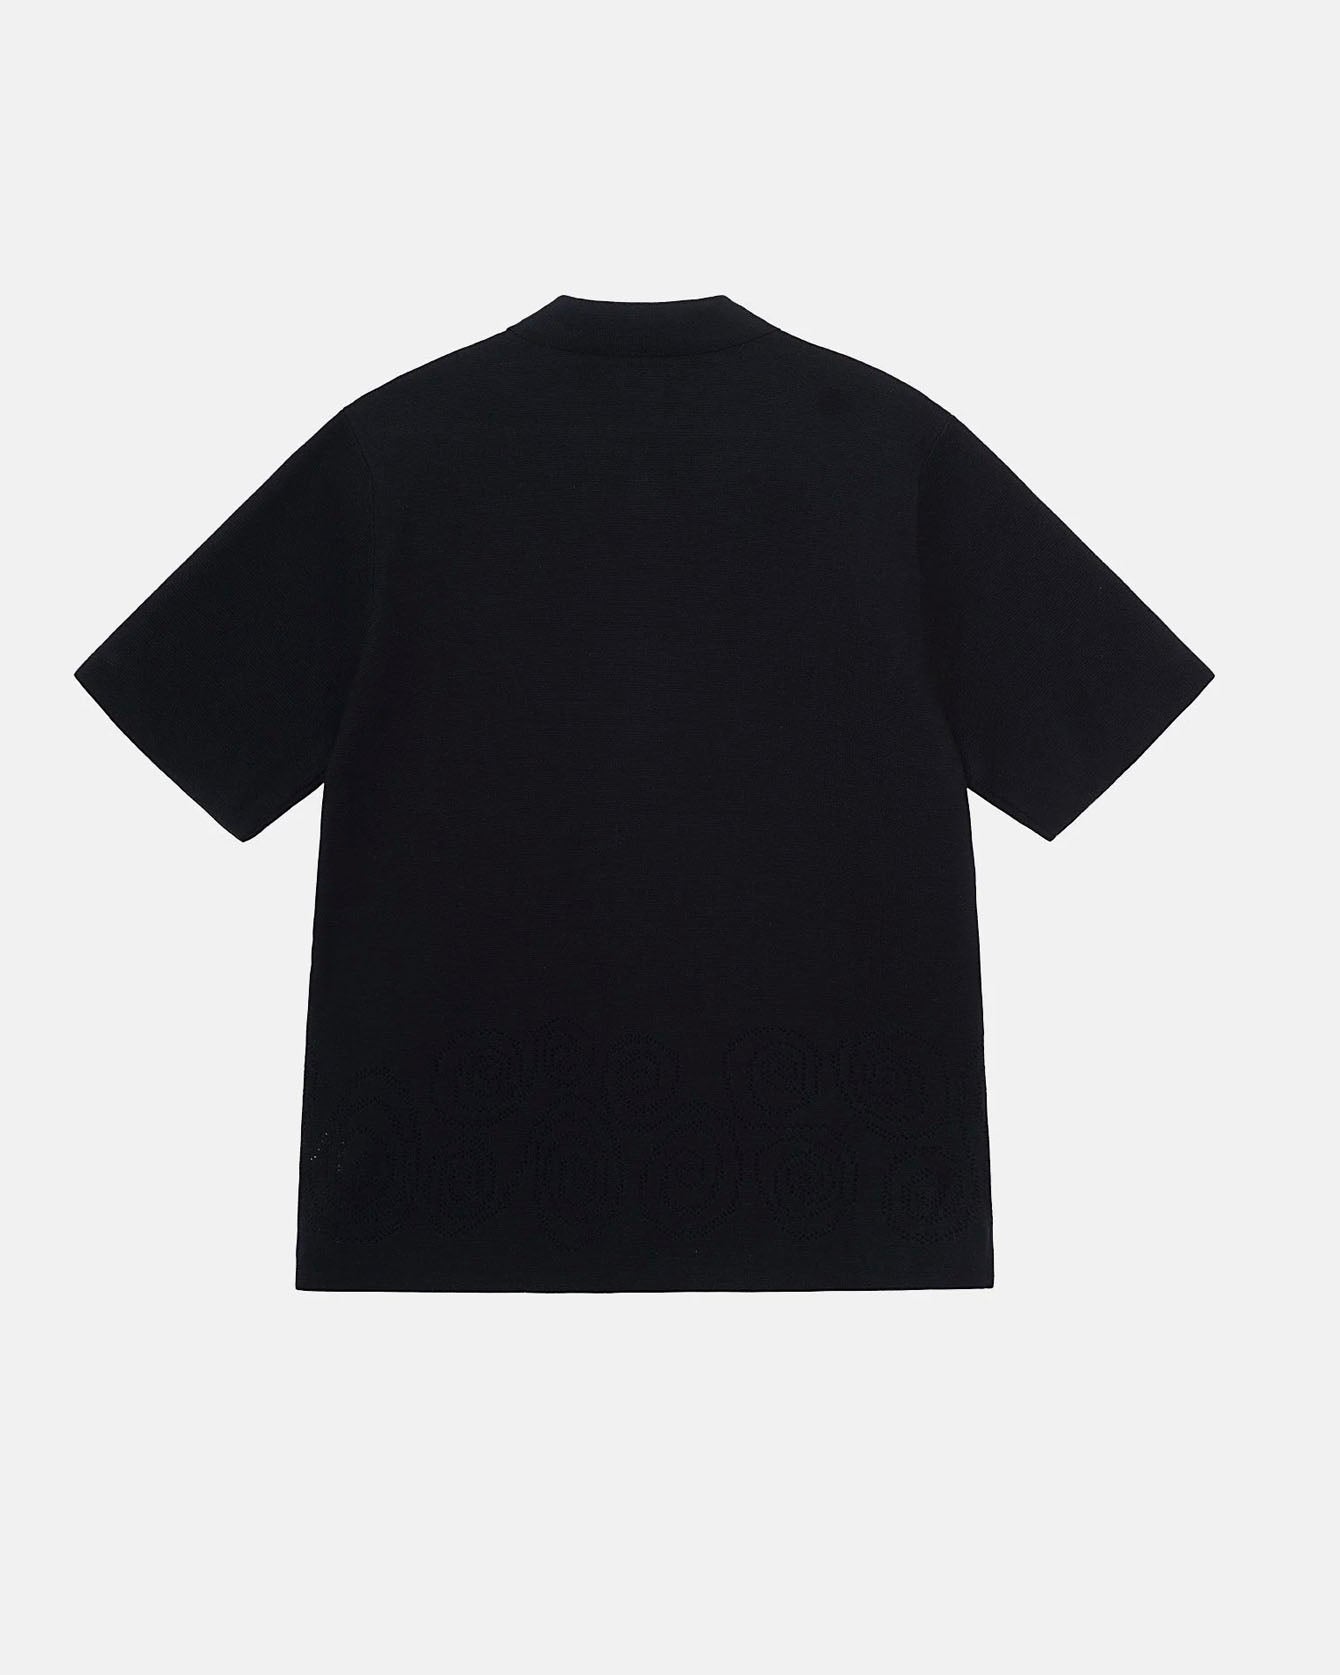 Perforated Swirl Knit Shirt Black